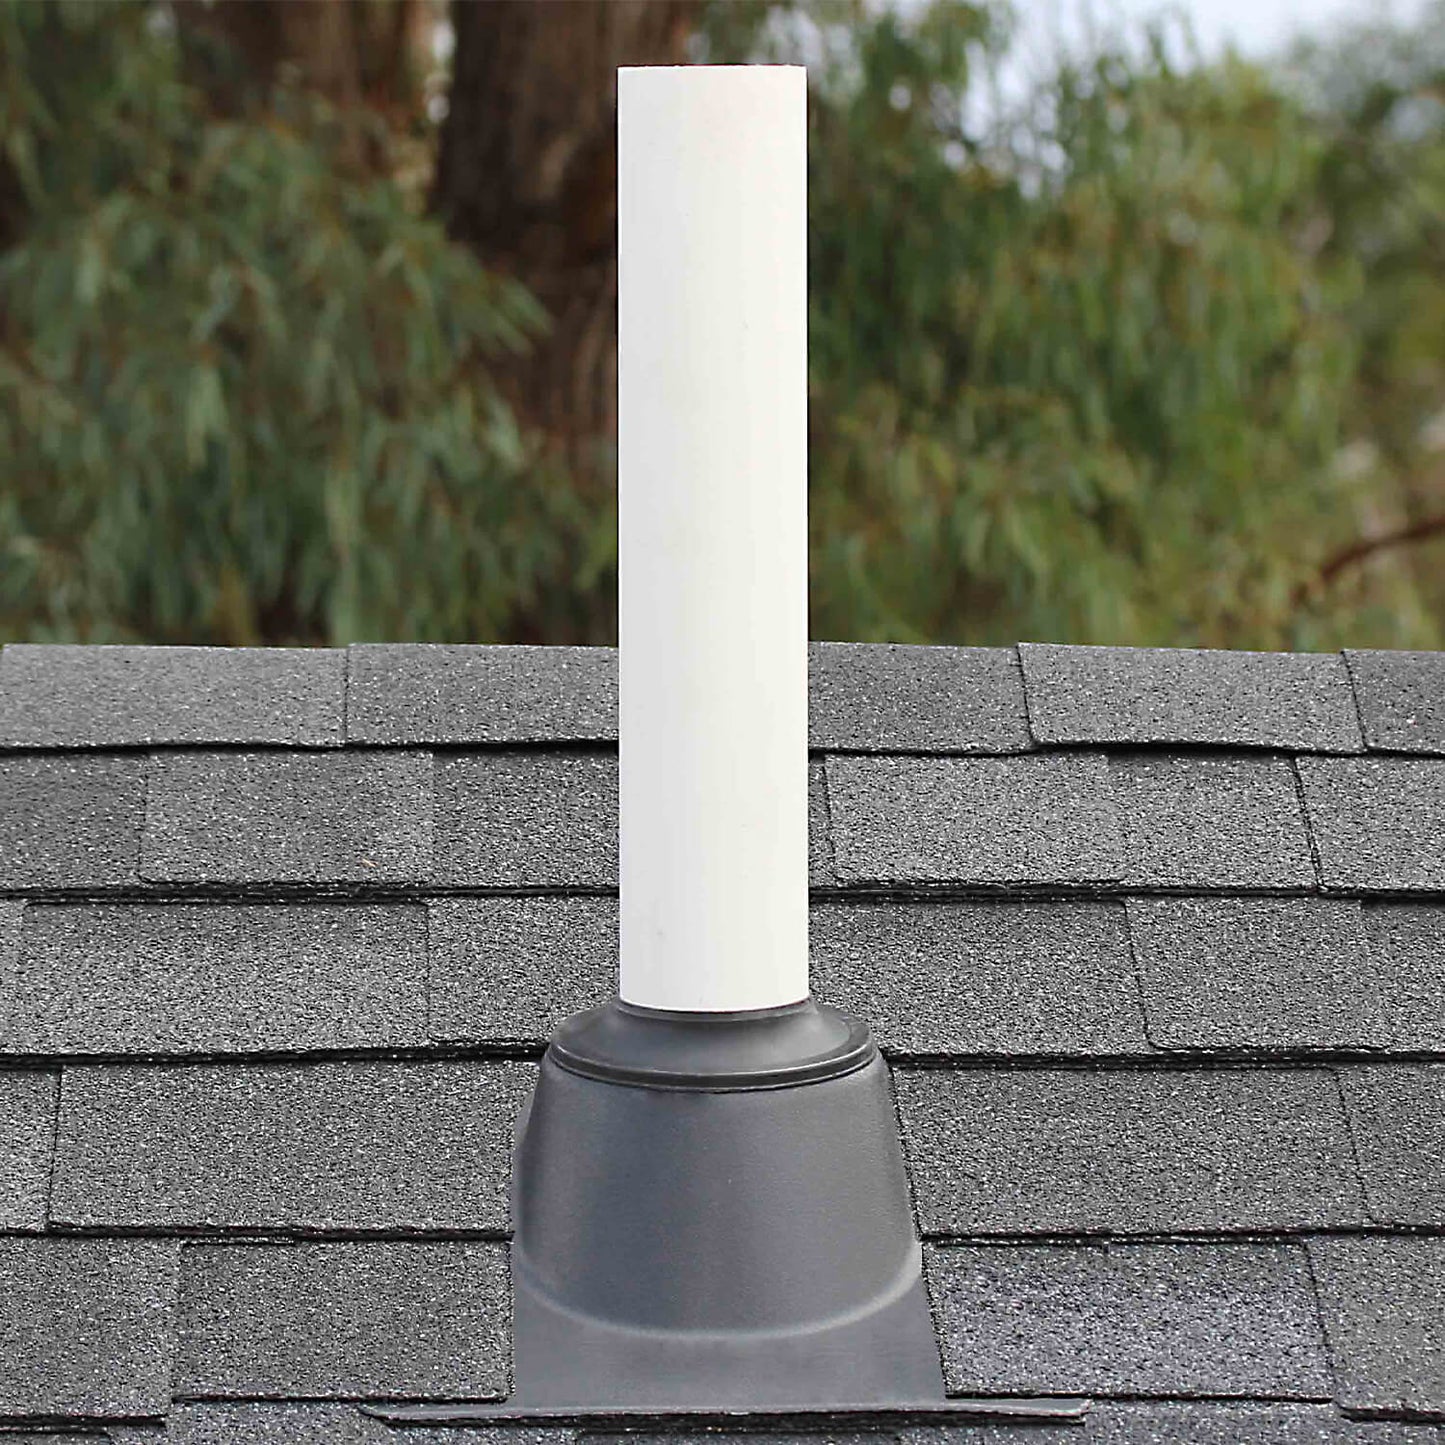 Dektite Pipe Flashing for Shingle Roof Applications. Thermoplastic Hard Base with Elastomer Collar.